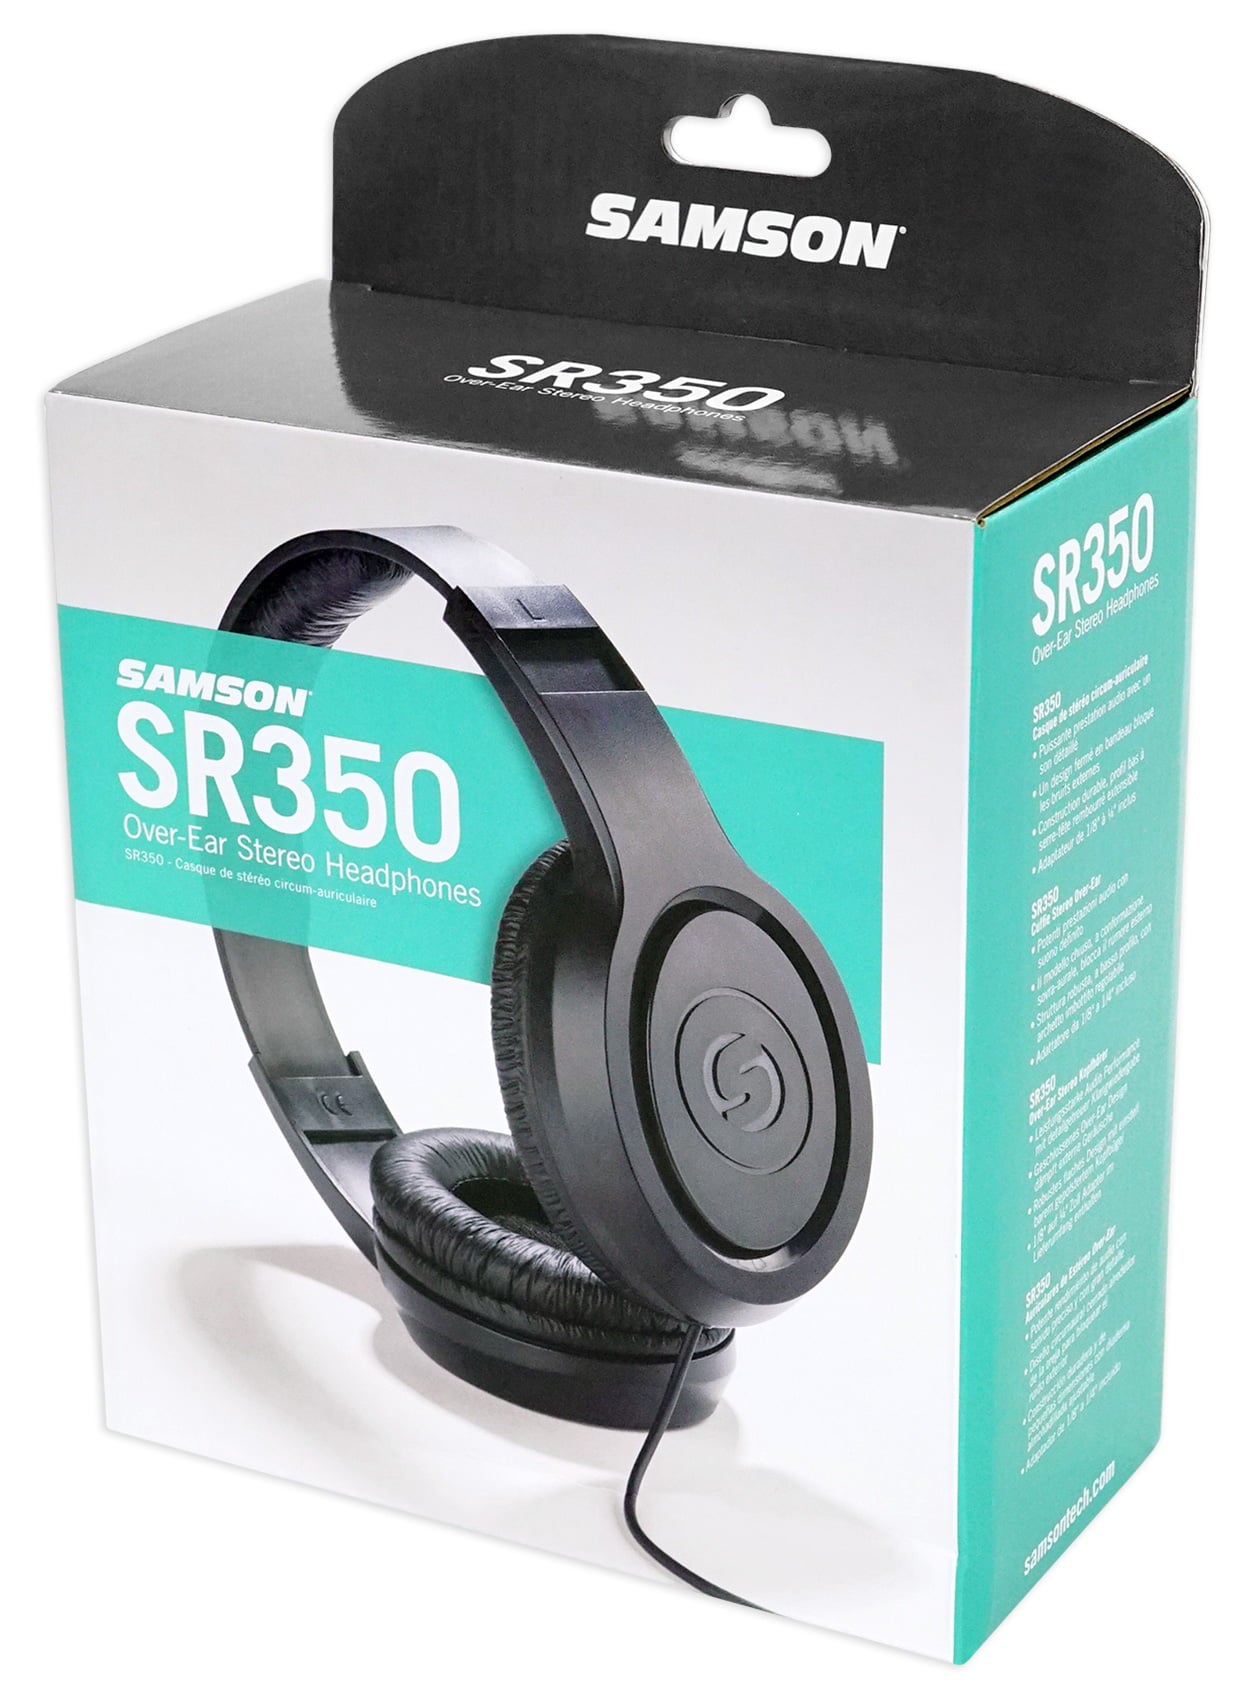 PRESONUS AUDIOBOX USB 96 2x2 Audio 2.0 Recording Interface + Samson Headphones